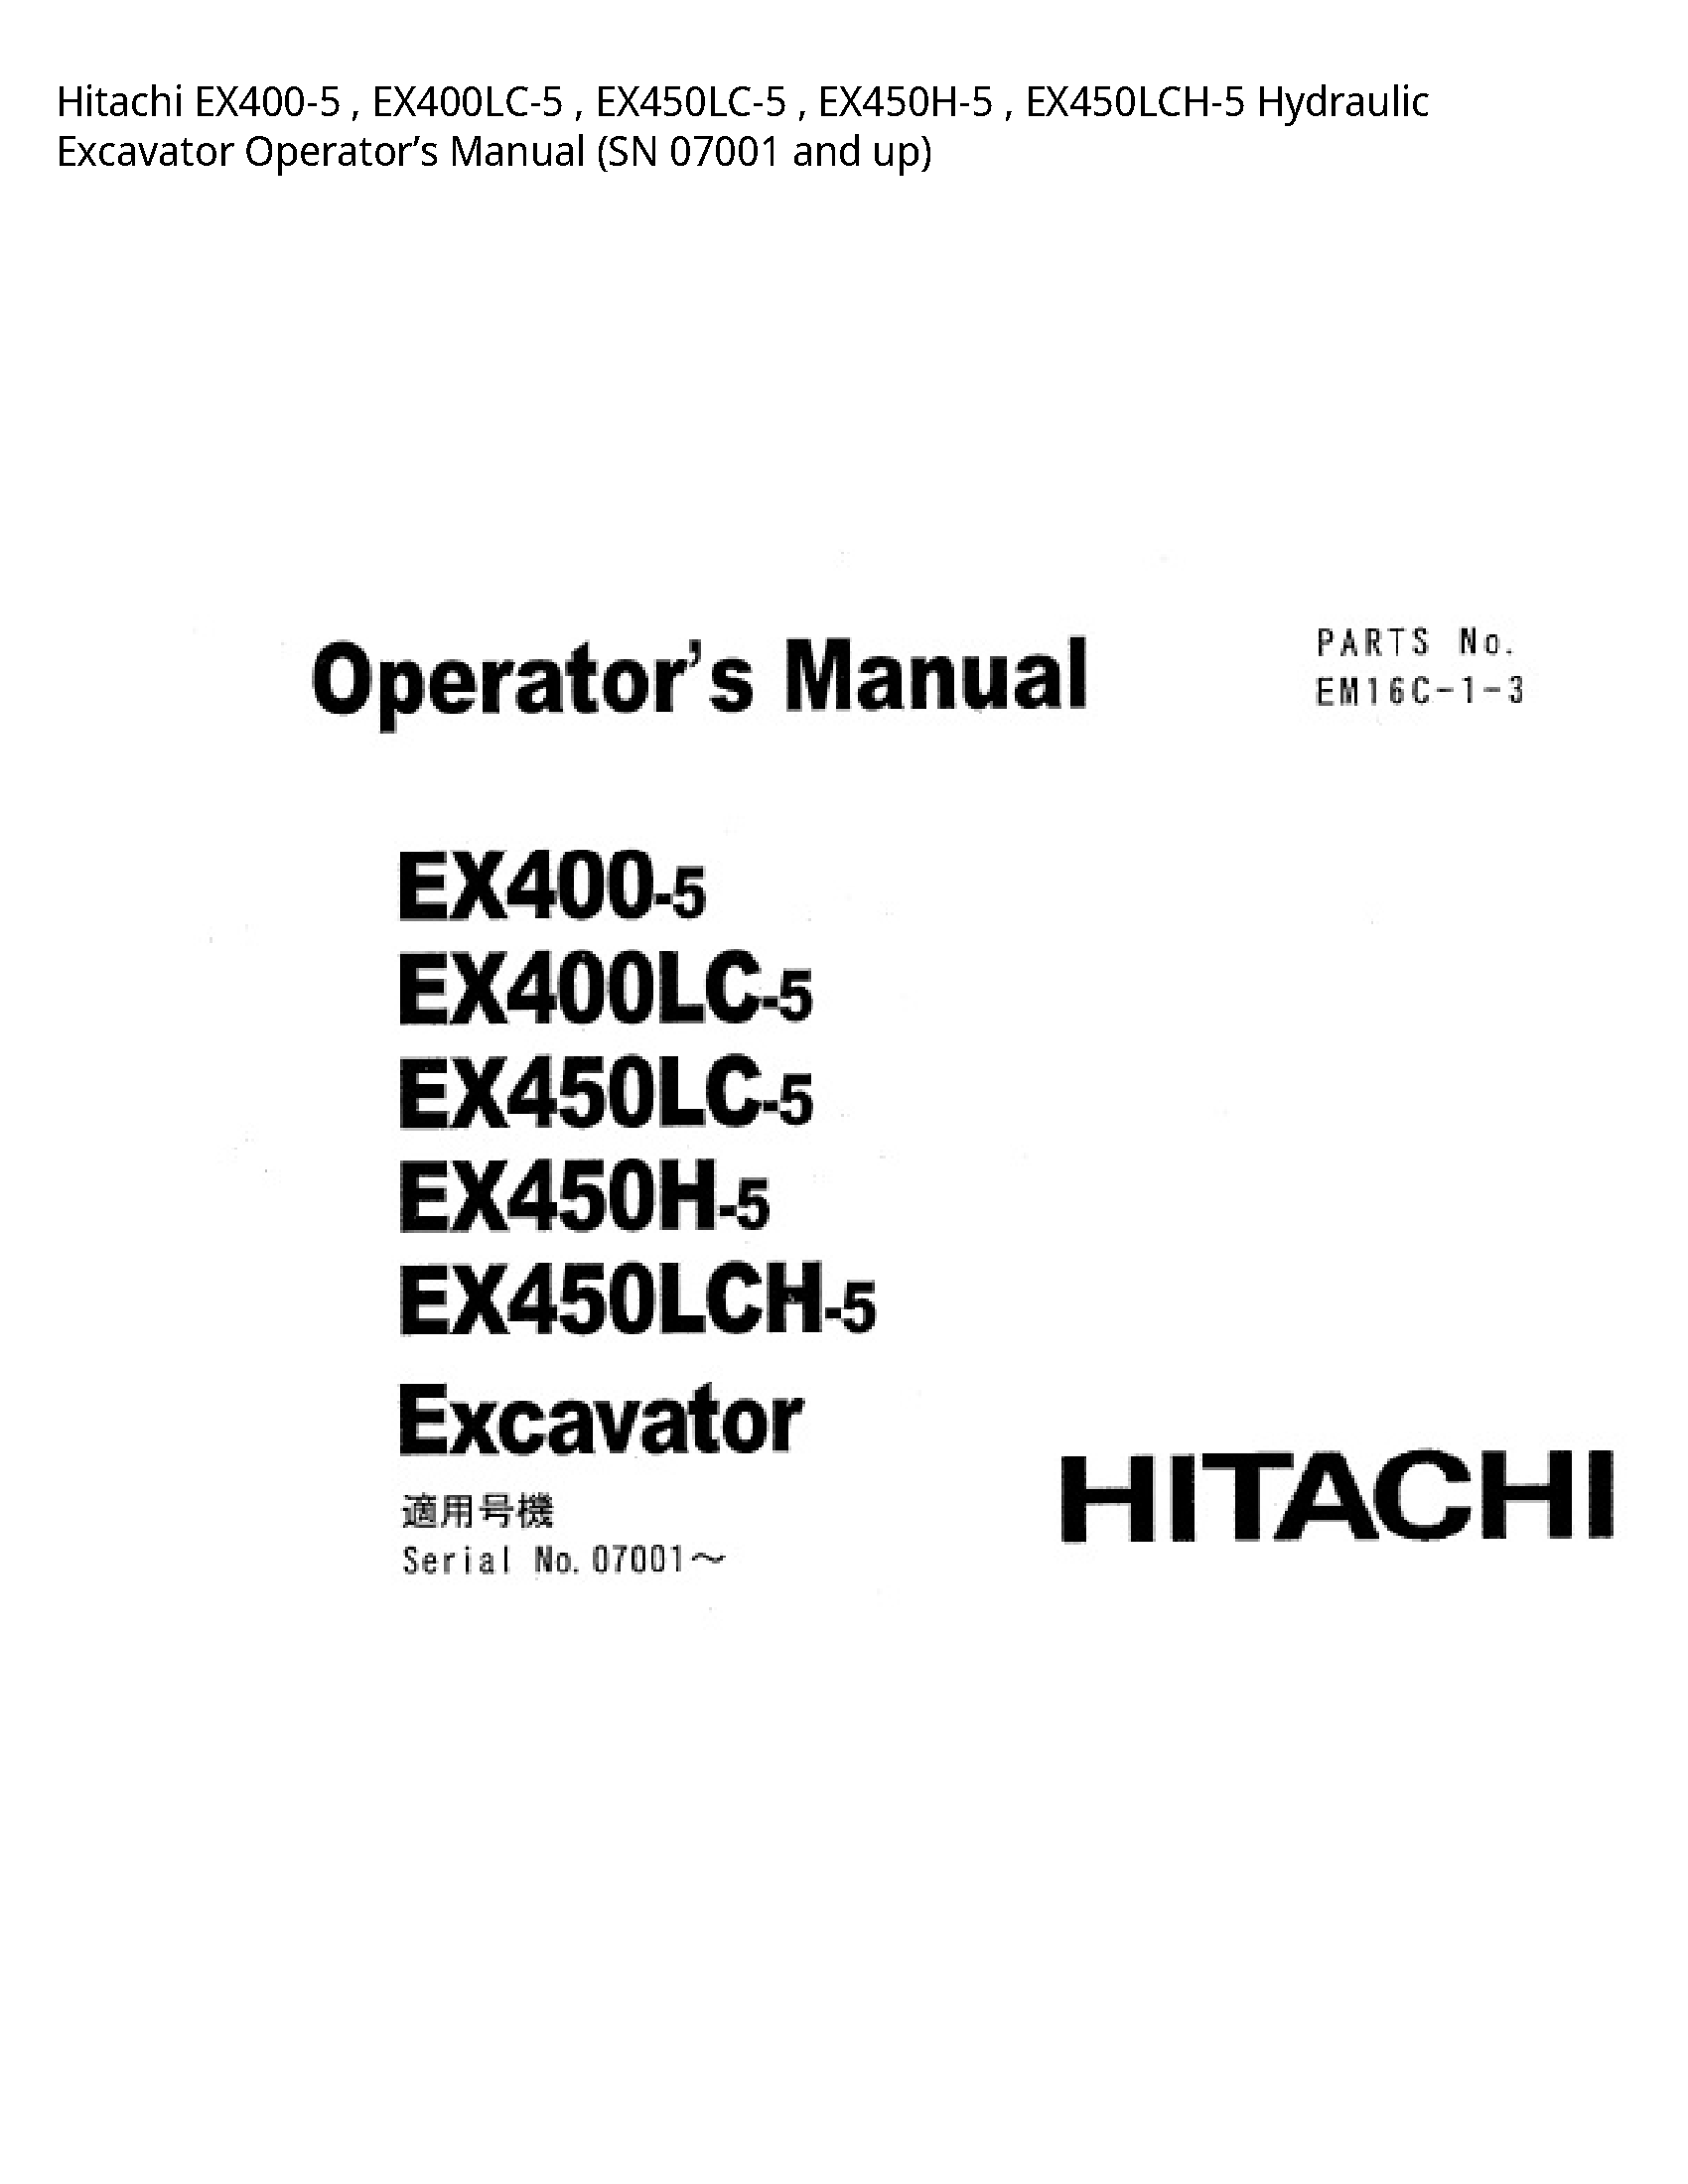 Hitachi EX400-5 Hydraulic Excavator Operator’s manual